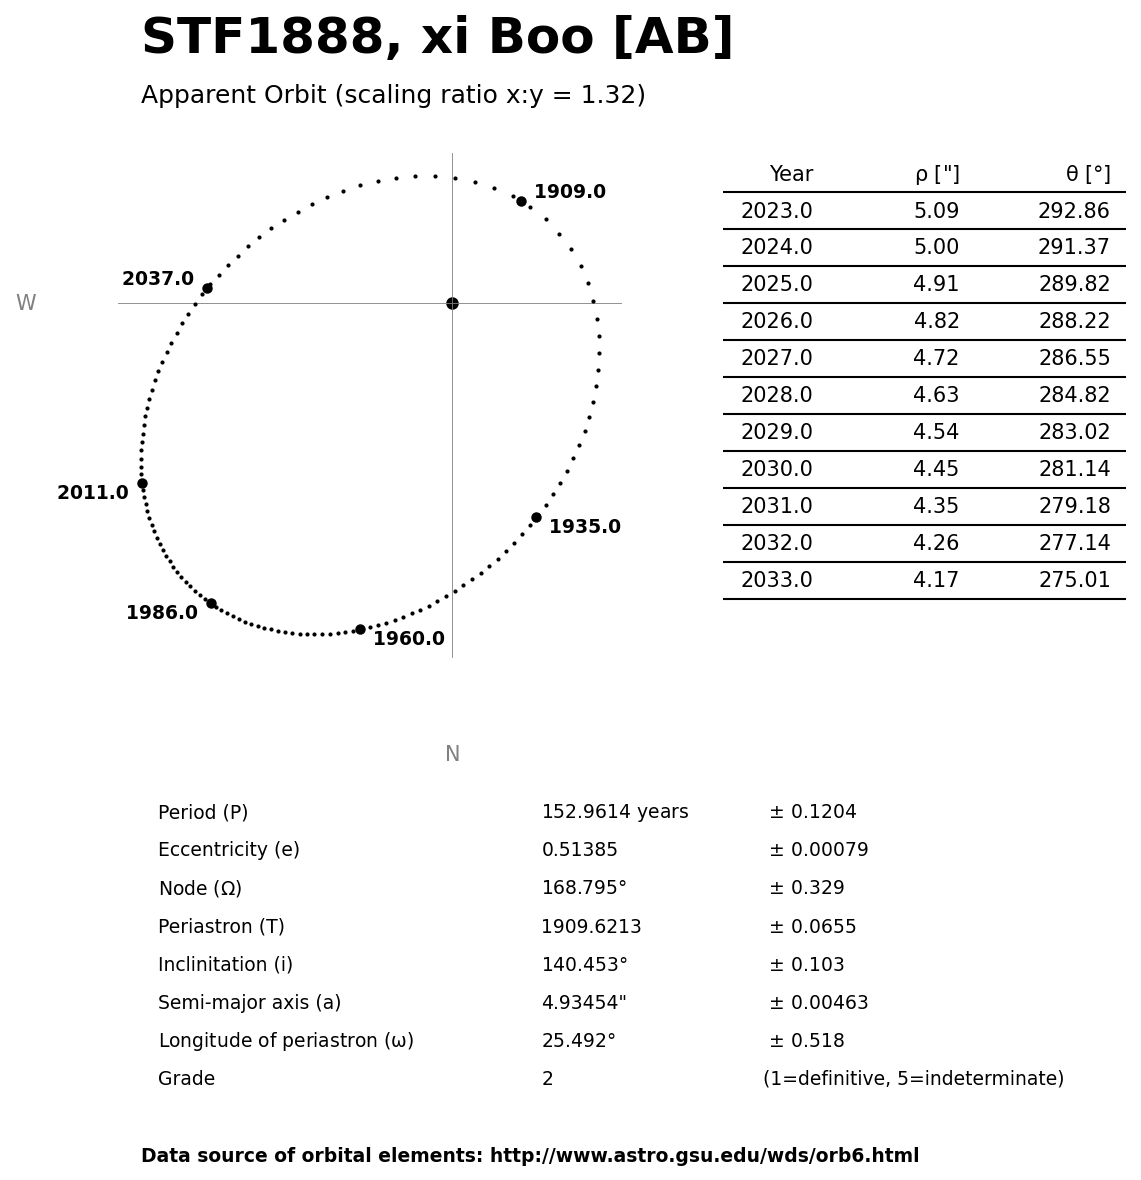 ../images/binary-star-orbits/STF1888-AB-orbit.jpg